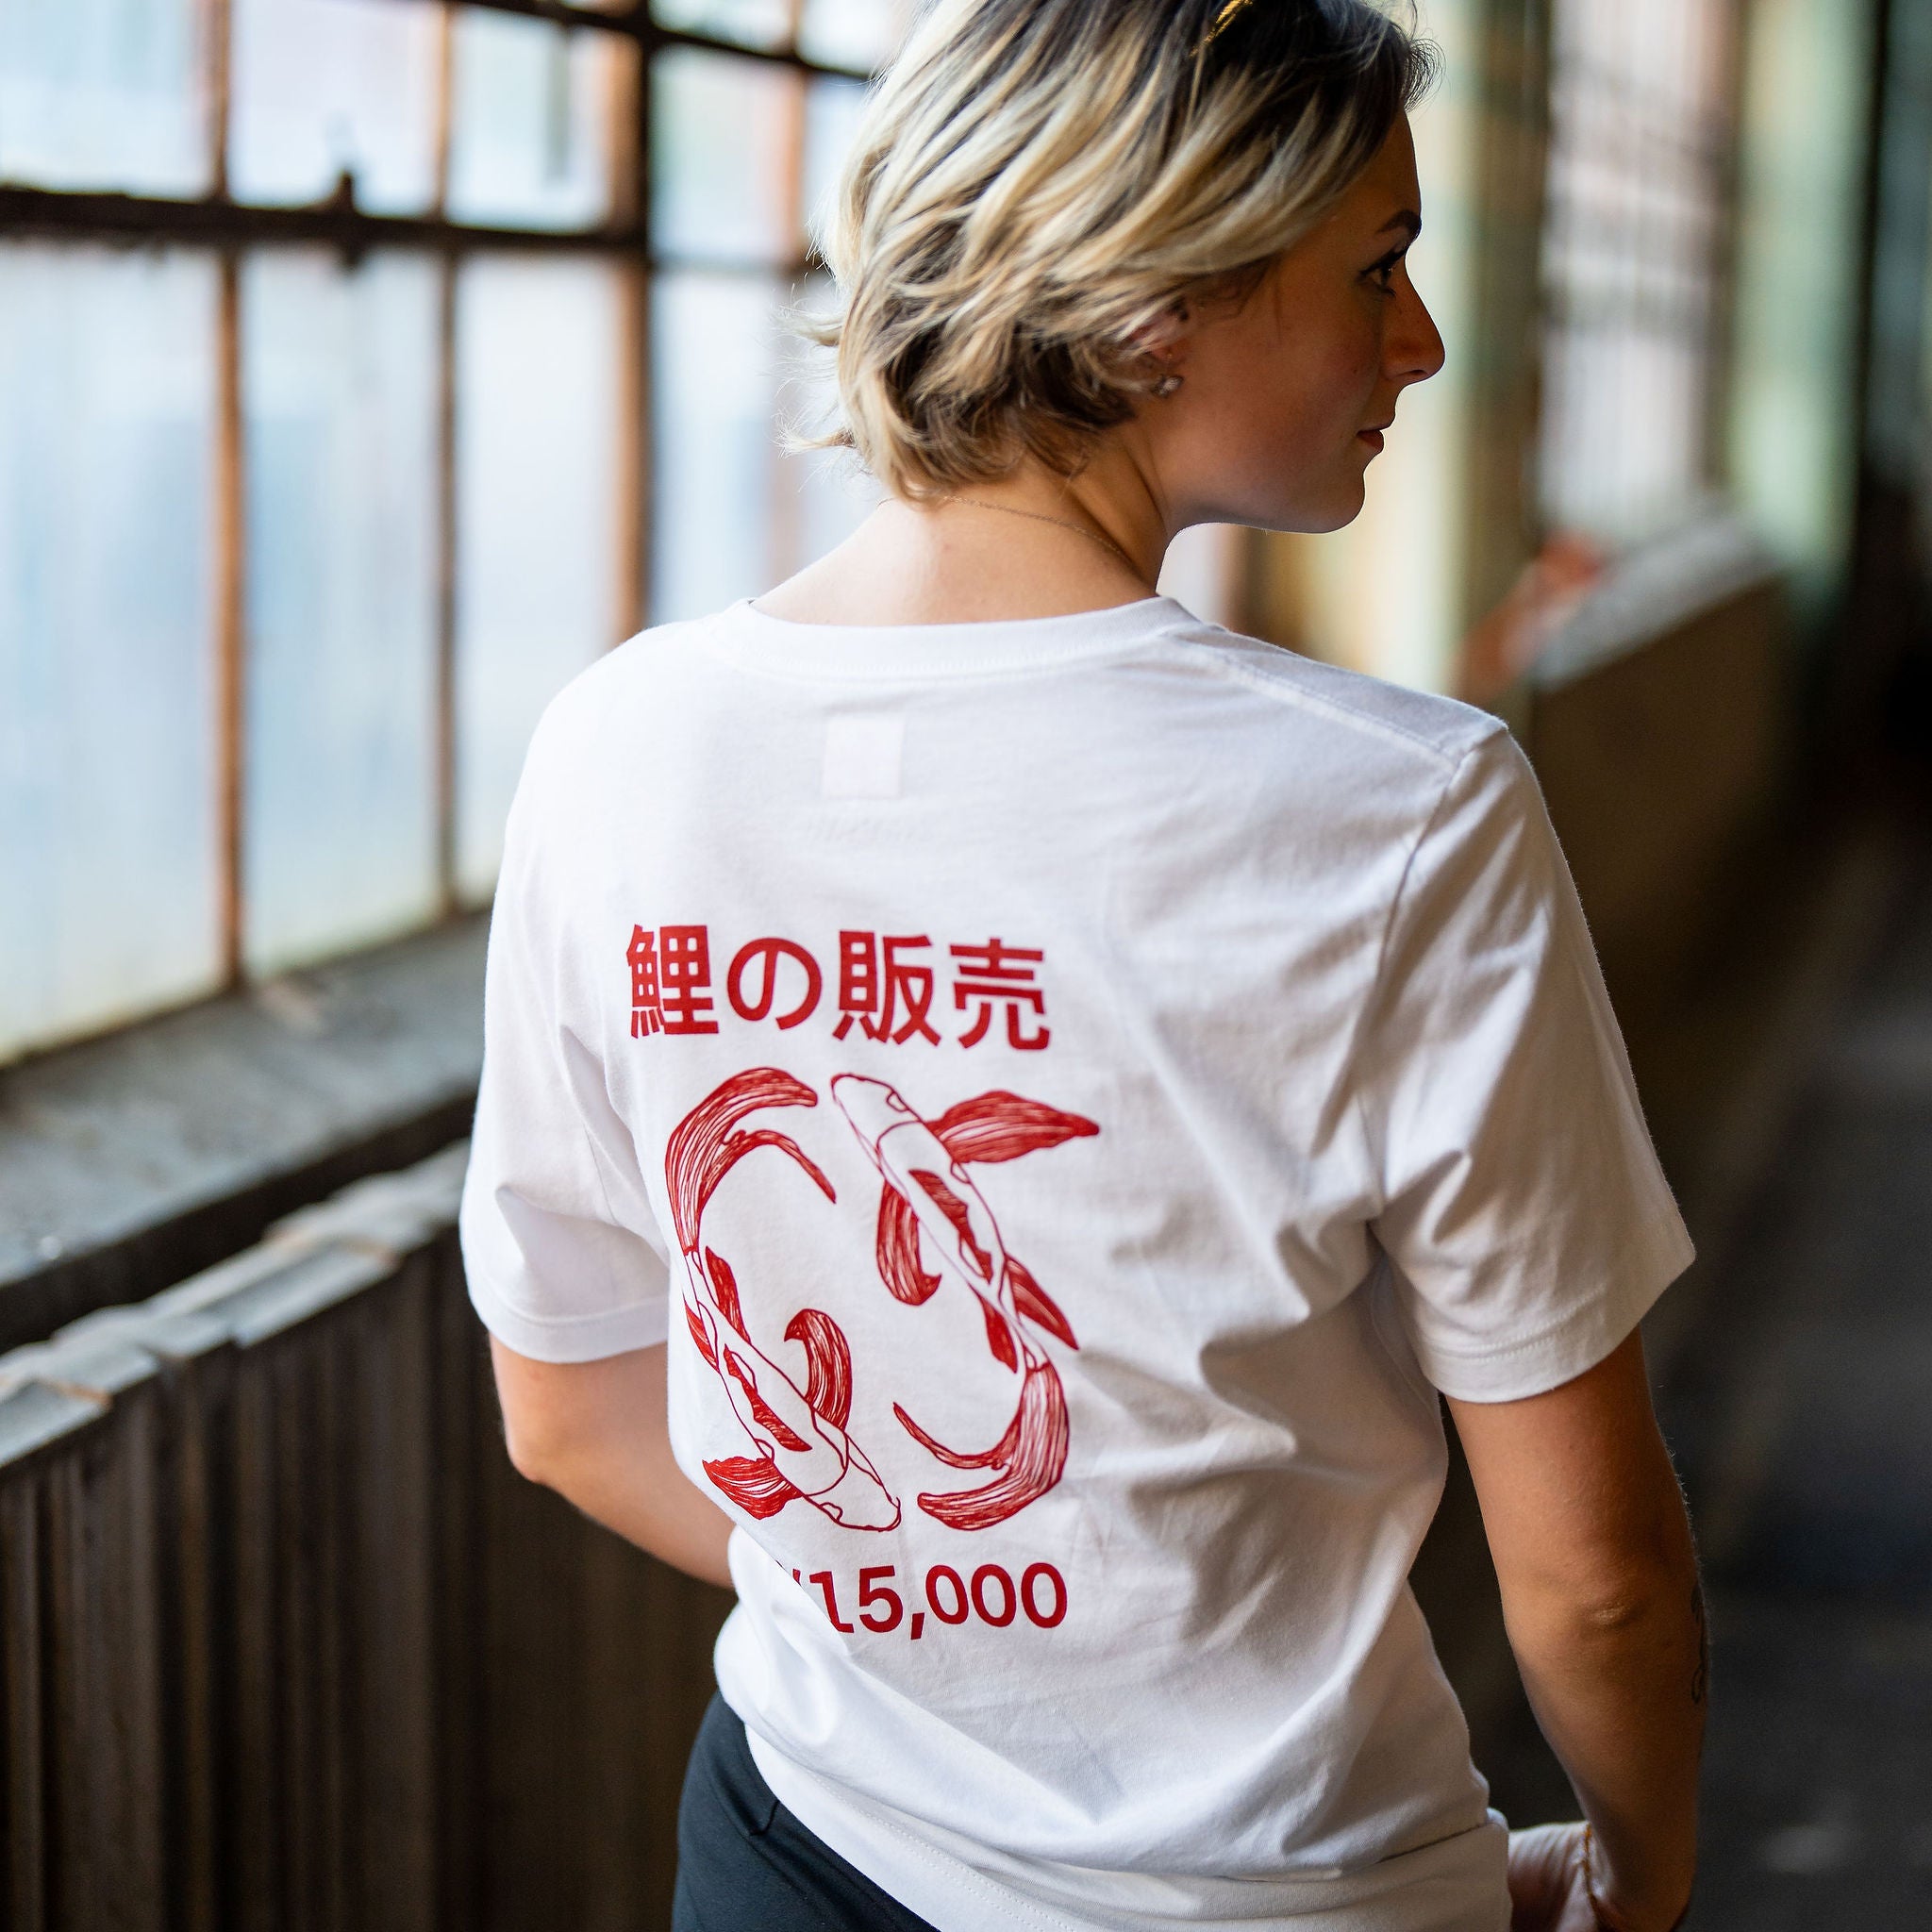 woman wearing white streetwear shirt with red koi fish design